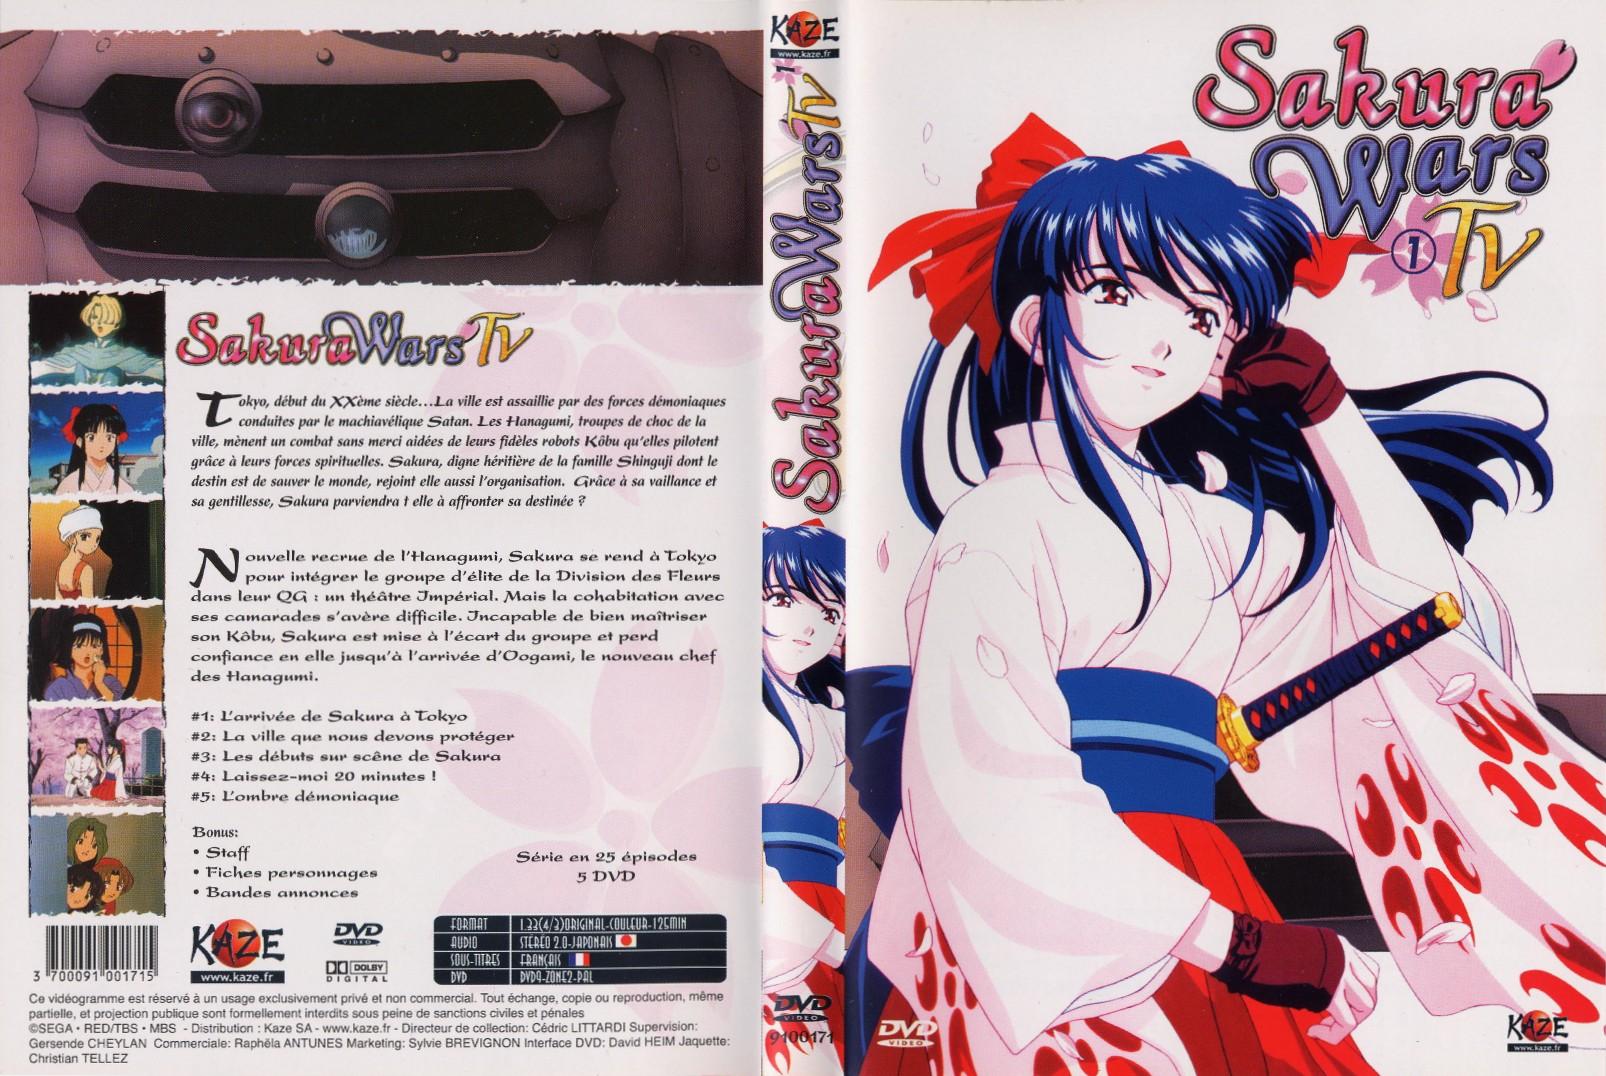 Jaquette DVD Sakura wars TV vol 1